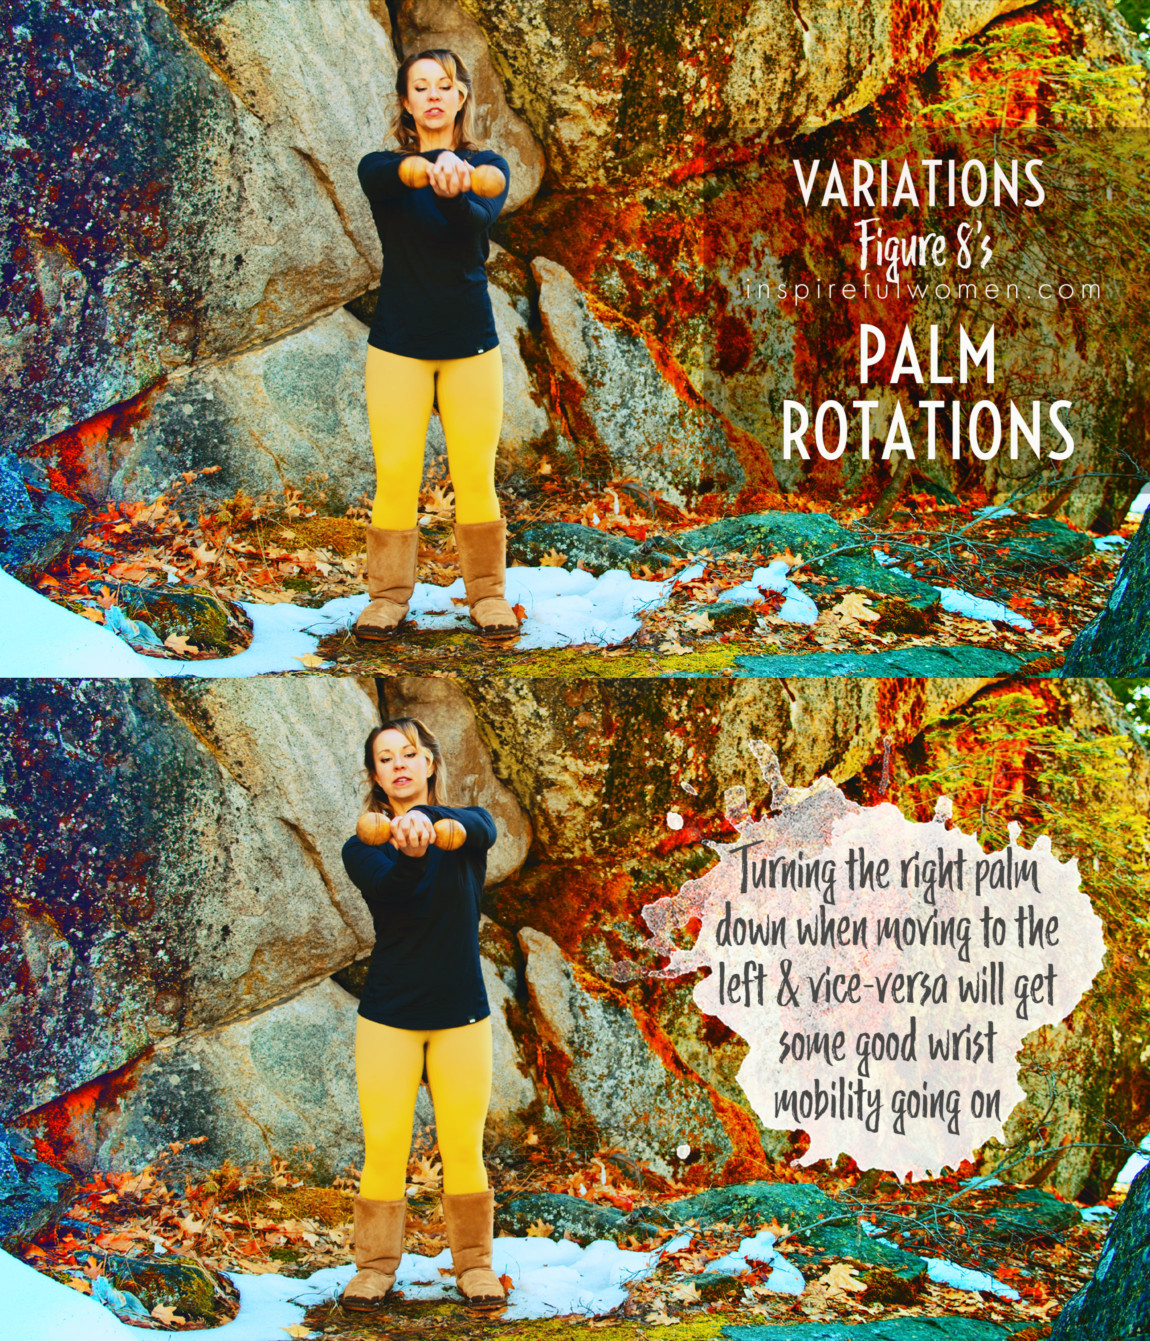 palm-rotations-dumbbell-figure-8-shoulder-exercise-variation